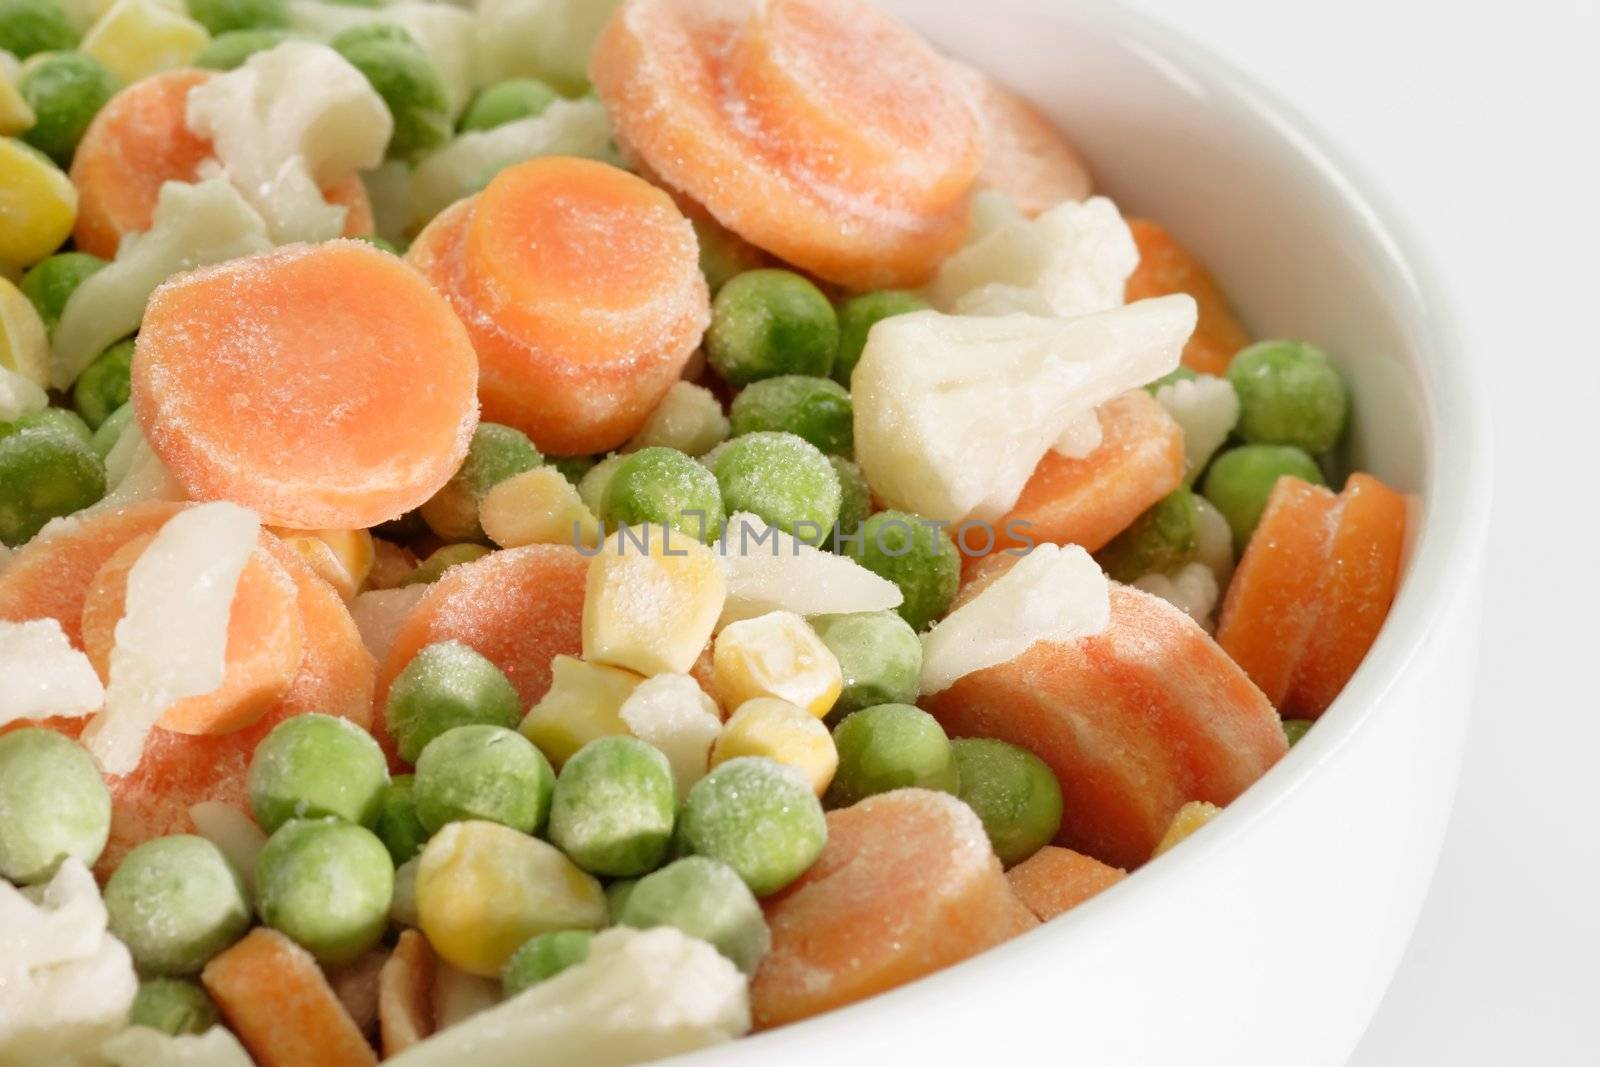 Frozen vegetables in a bowl on light background